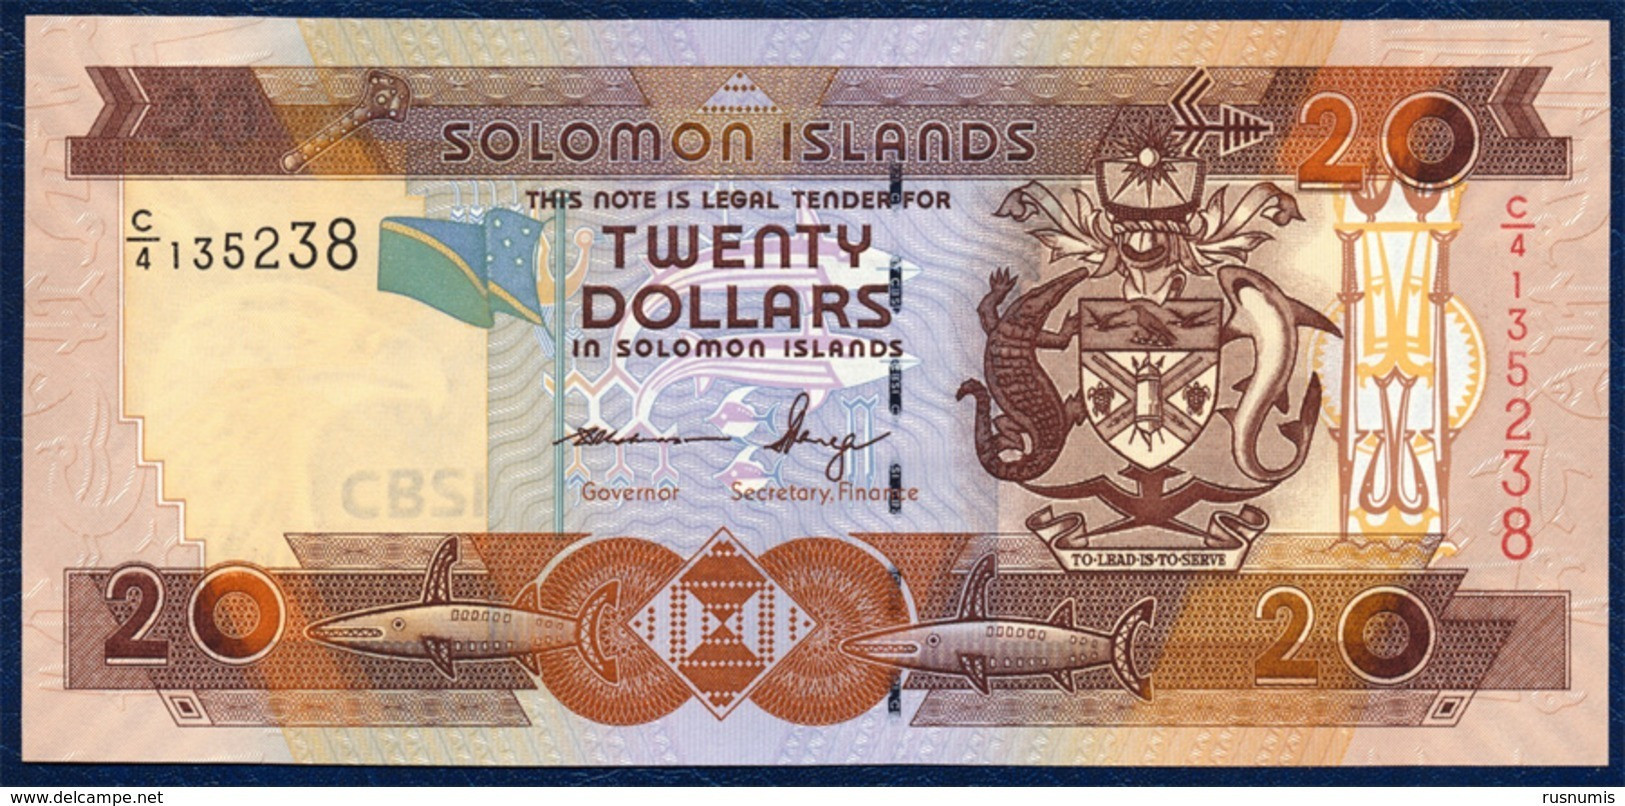 SOLOMON ISLANDS 20 DOLLARS P-28b 2011 UNC - Solomon Islands